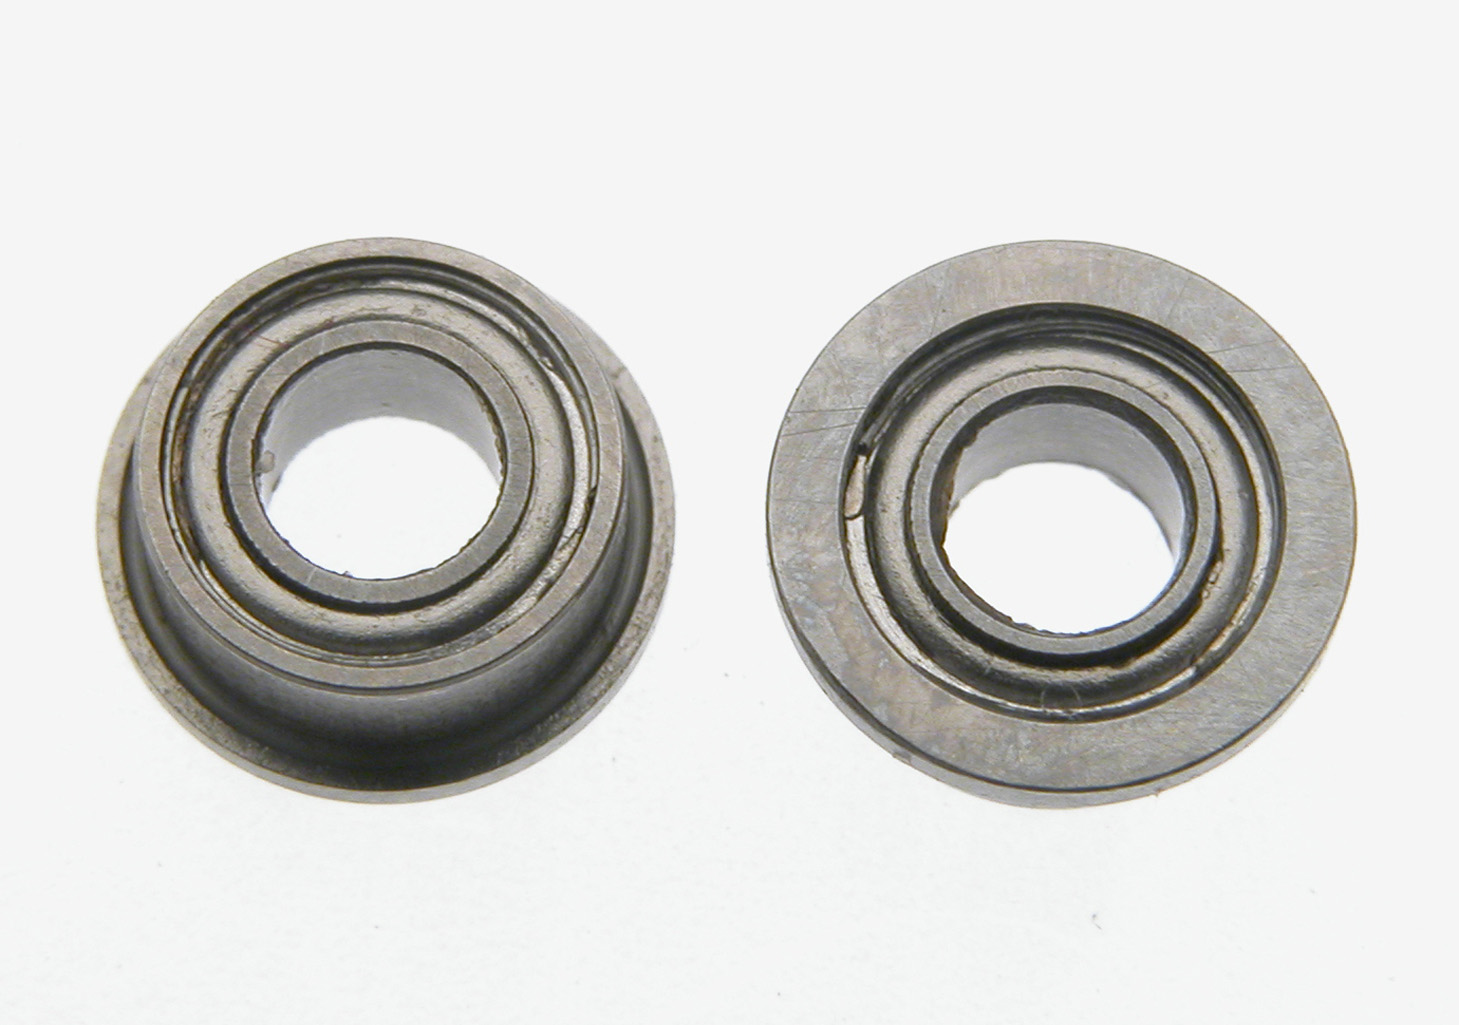 SC-1331 Steel ball bearing 6mm x 3mm. Flanged